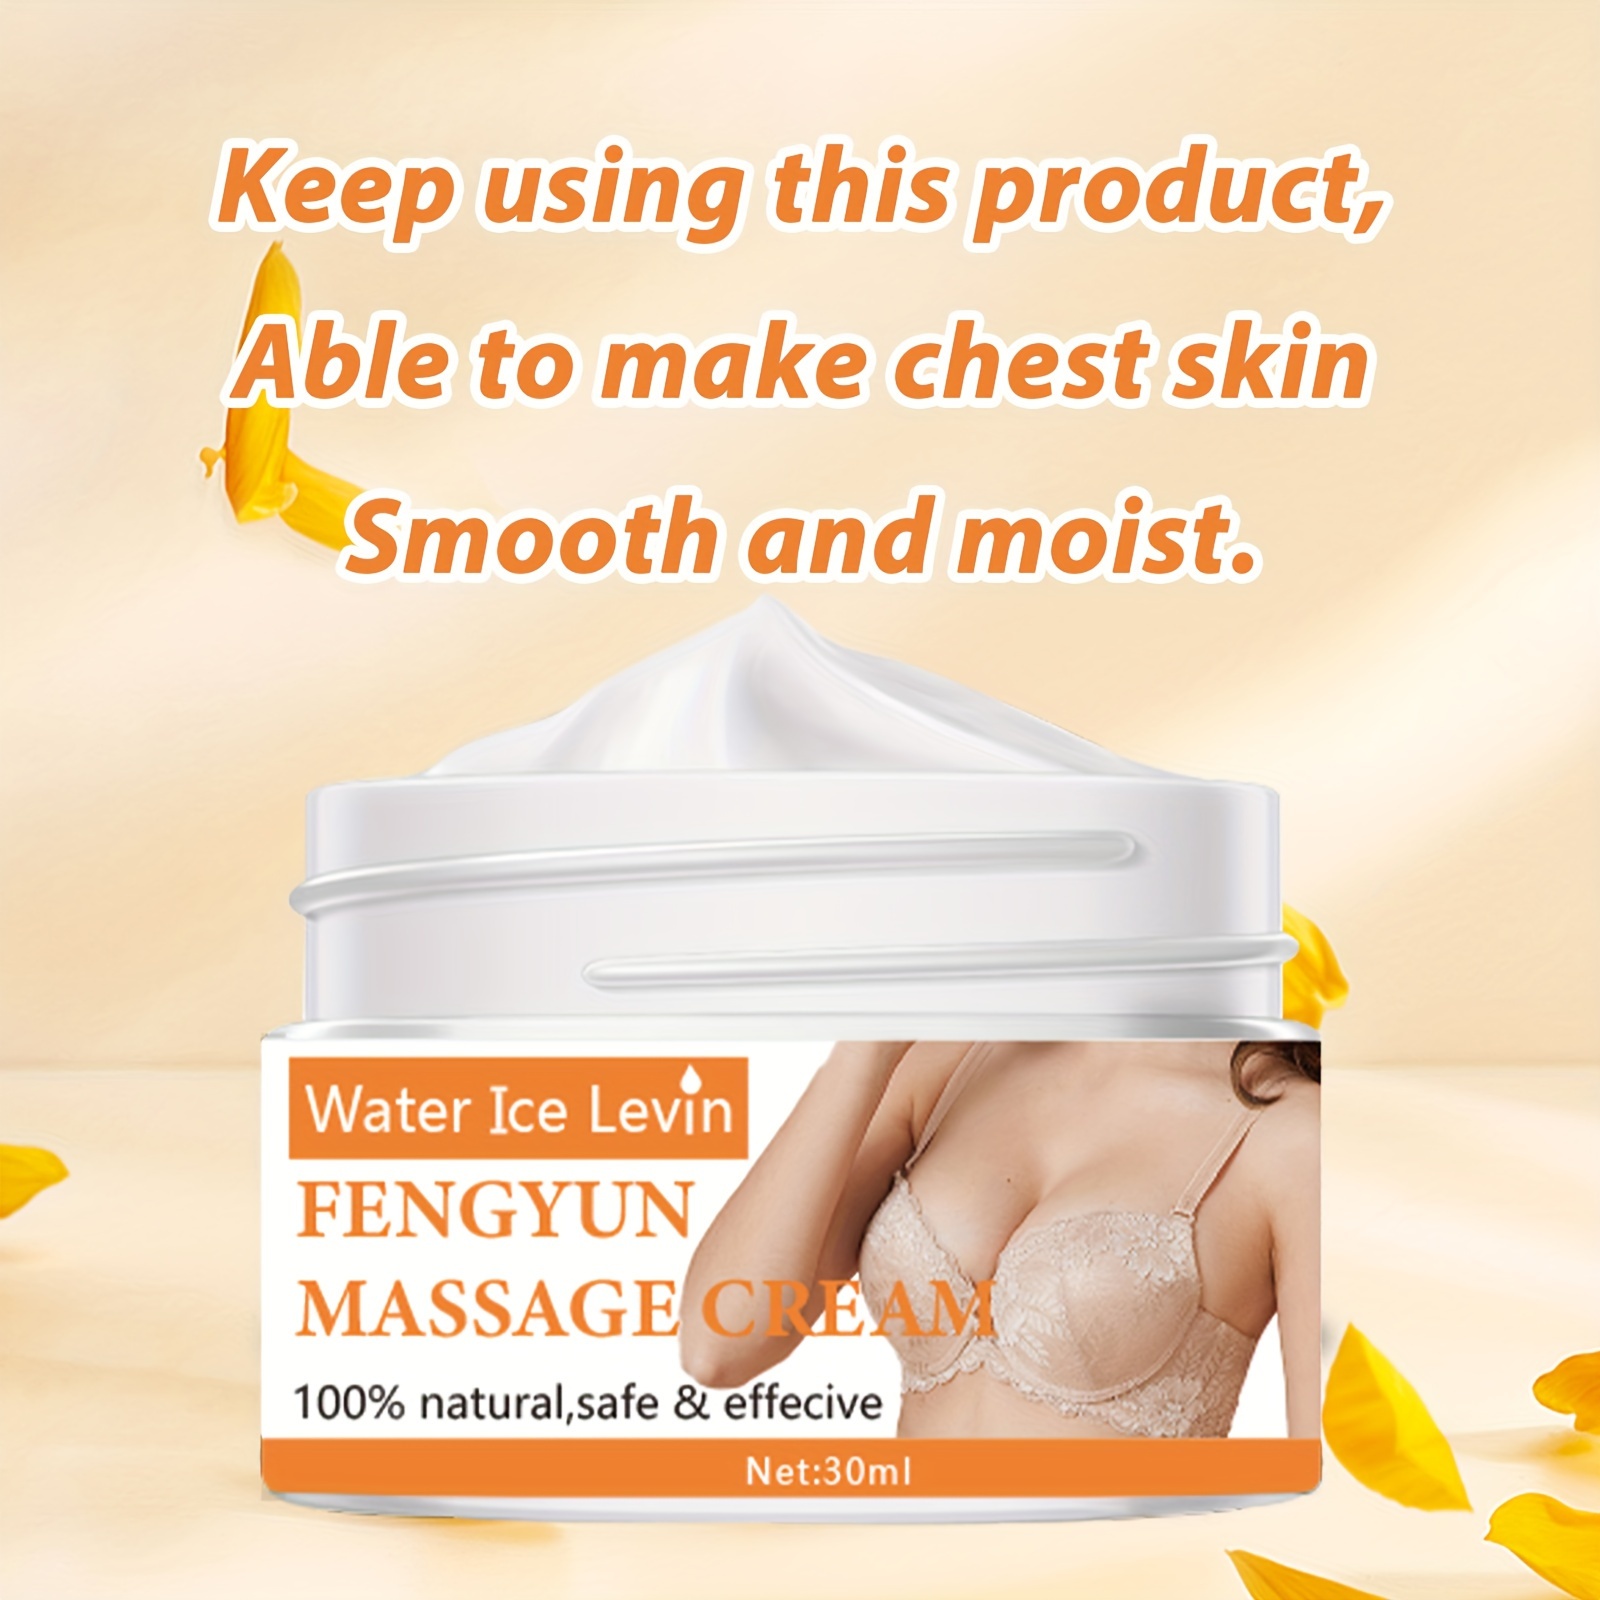 Full N Fine Ayurvedic Breast Massage Cream For Women at Rs 120